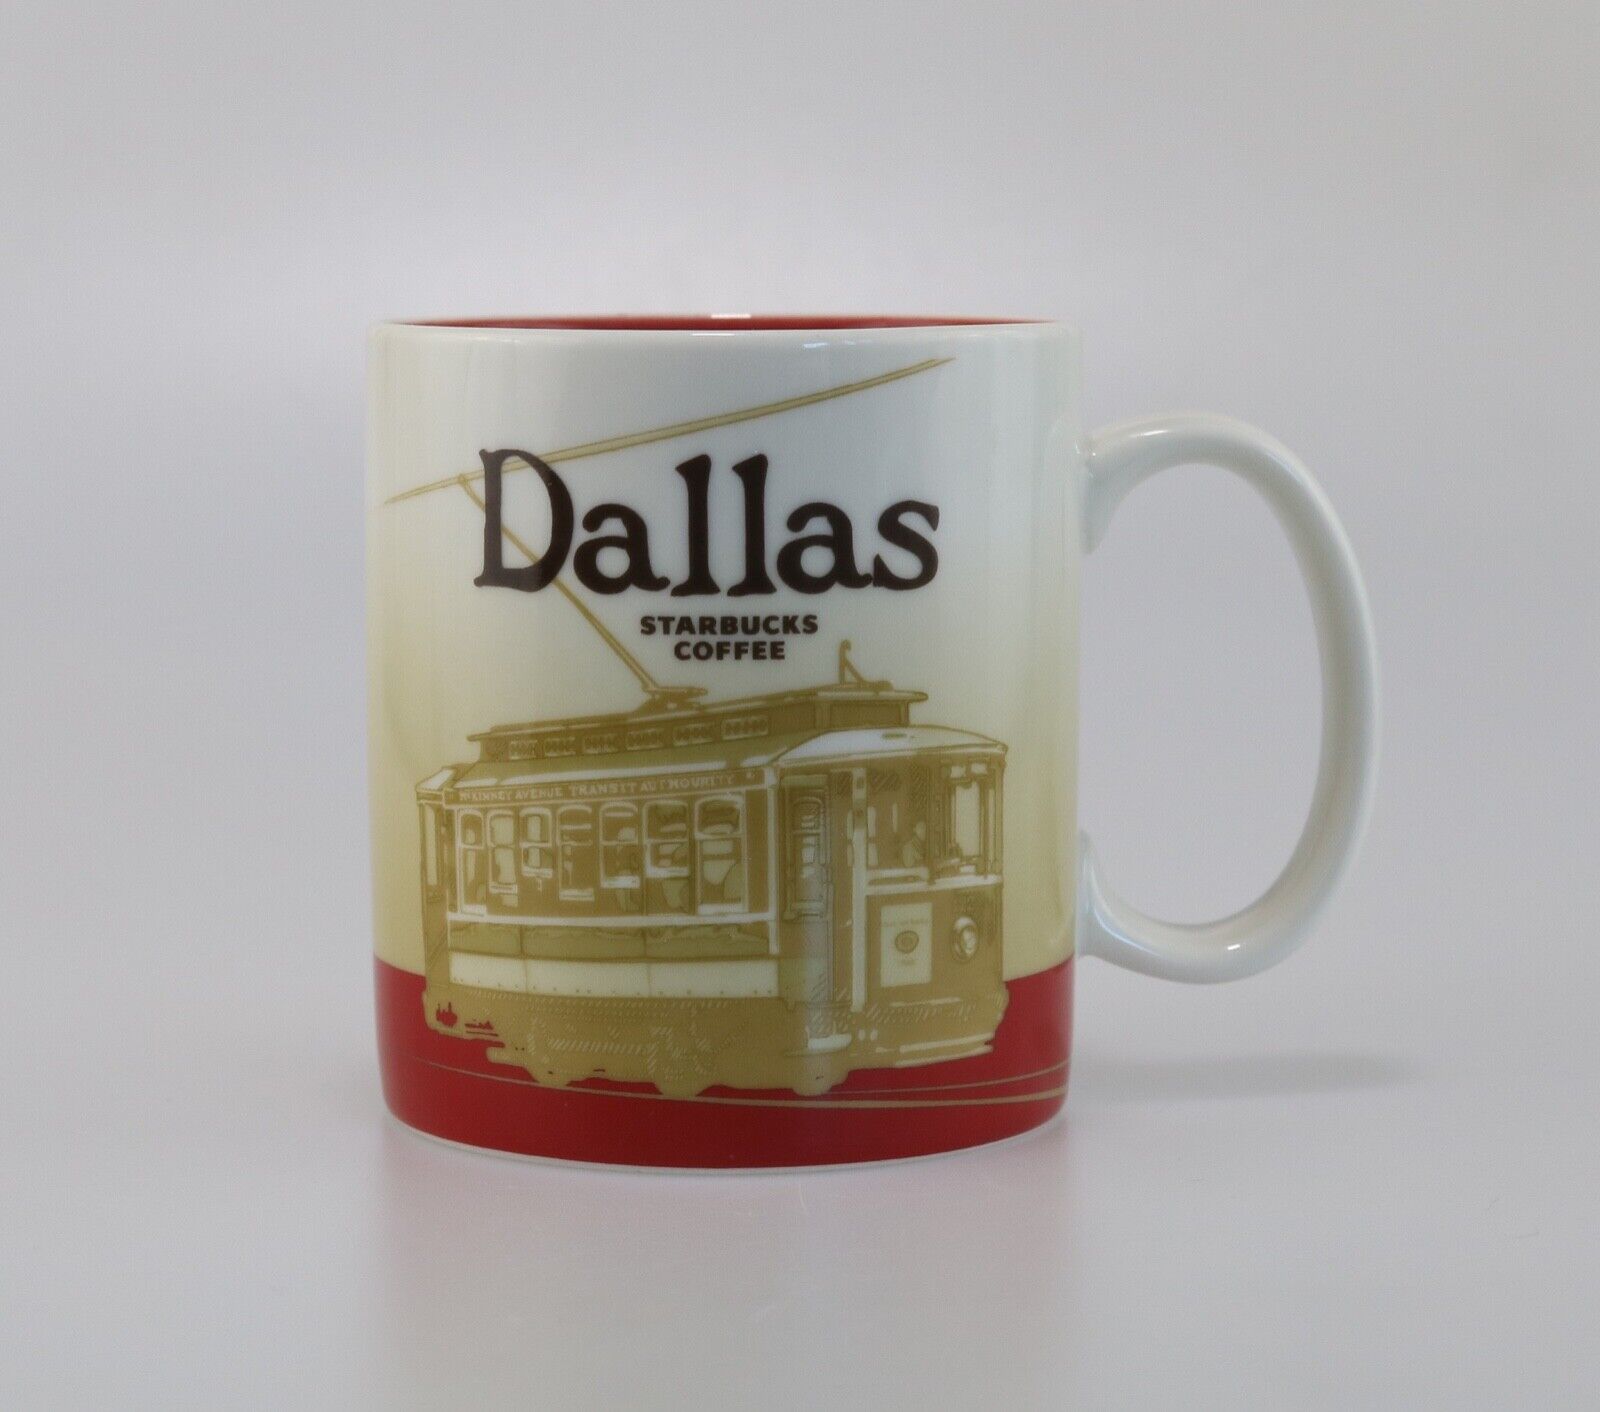 Starbucks Dallas Coffee Tea Cup Mug 16 oz Collector Series 2009 Red Gold Barista